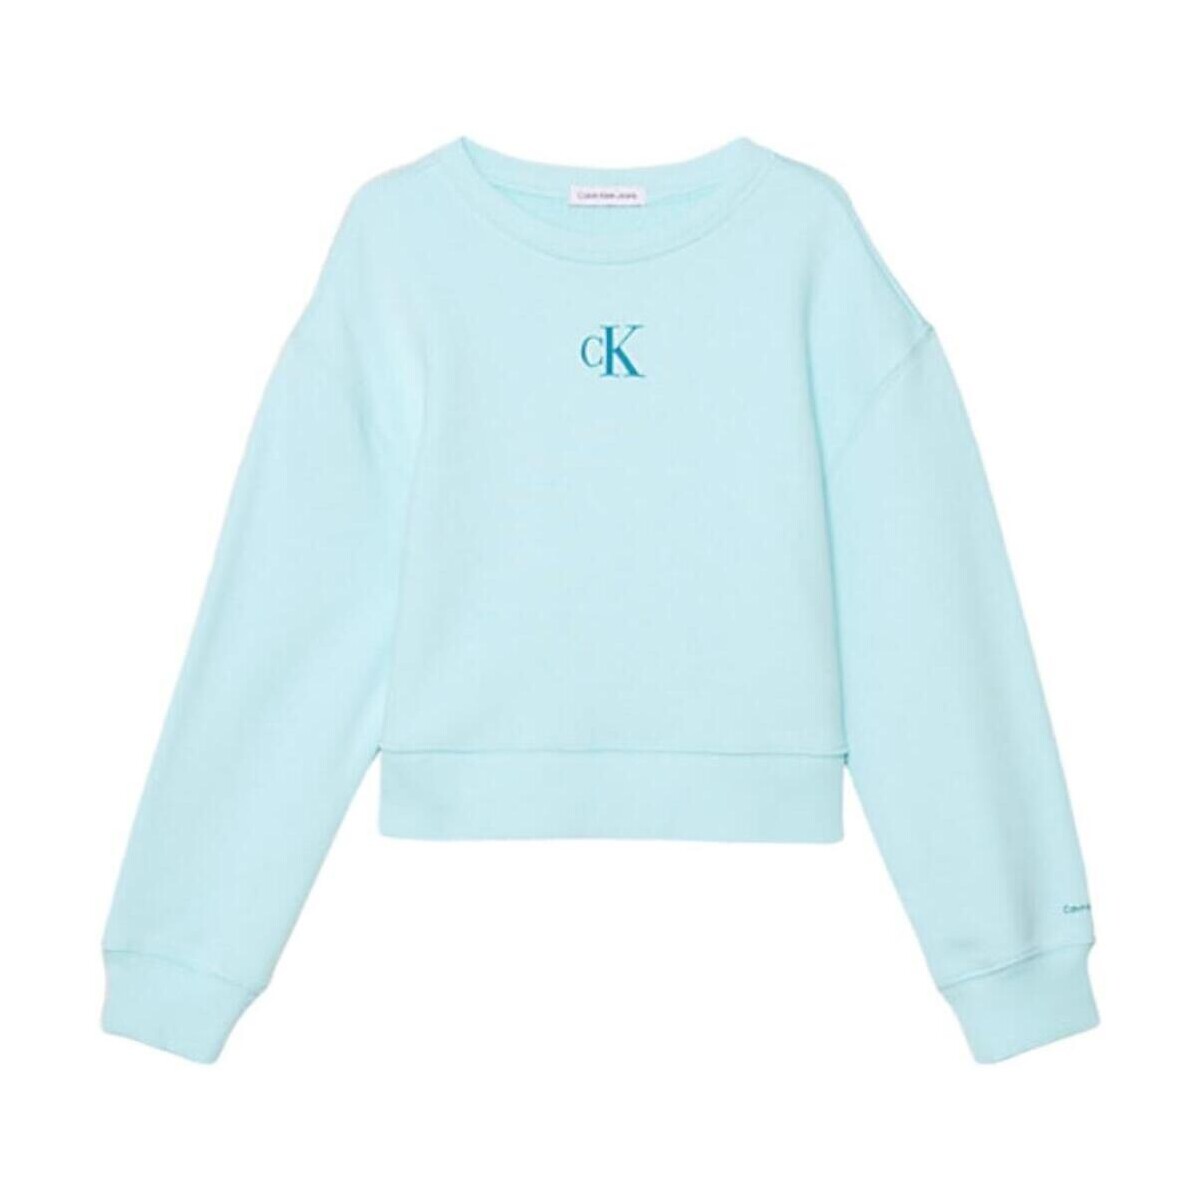 textil Flickor Sweatshirts Calvin Klein Jeans  Blå